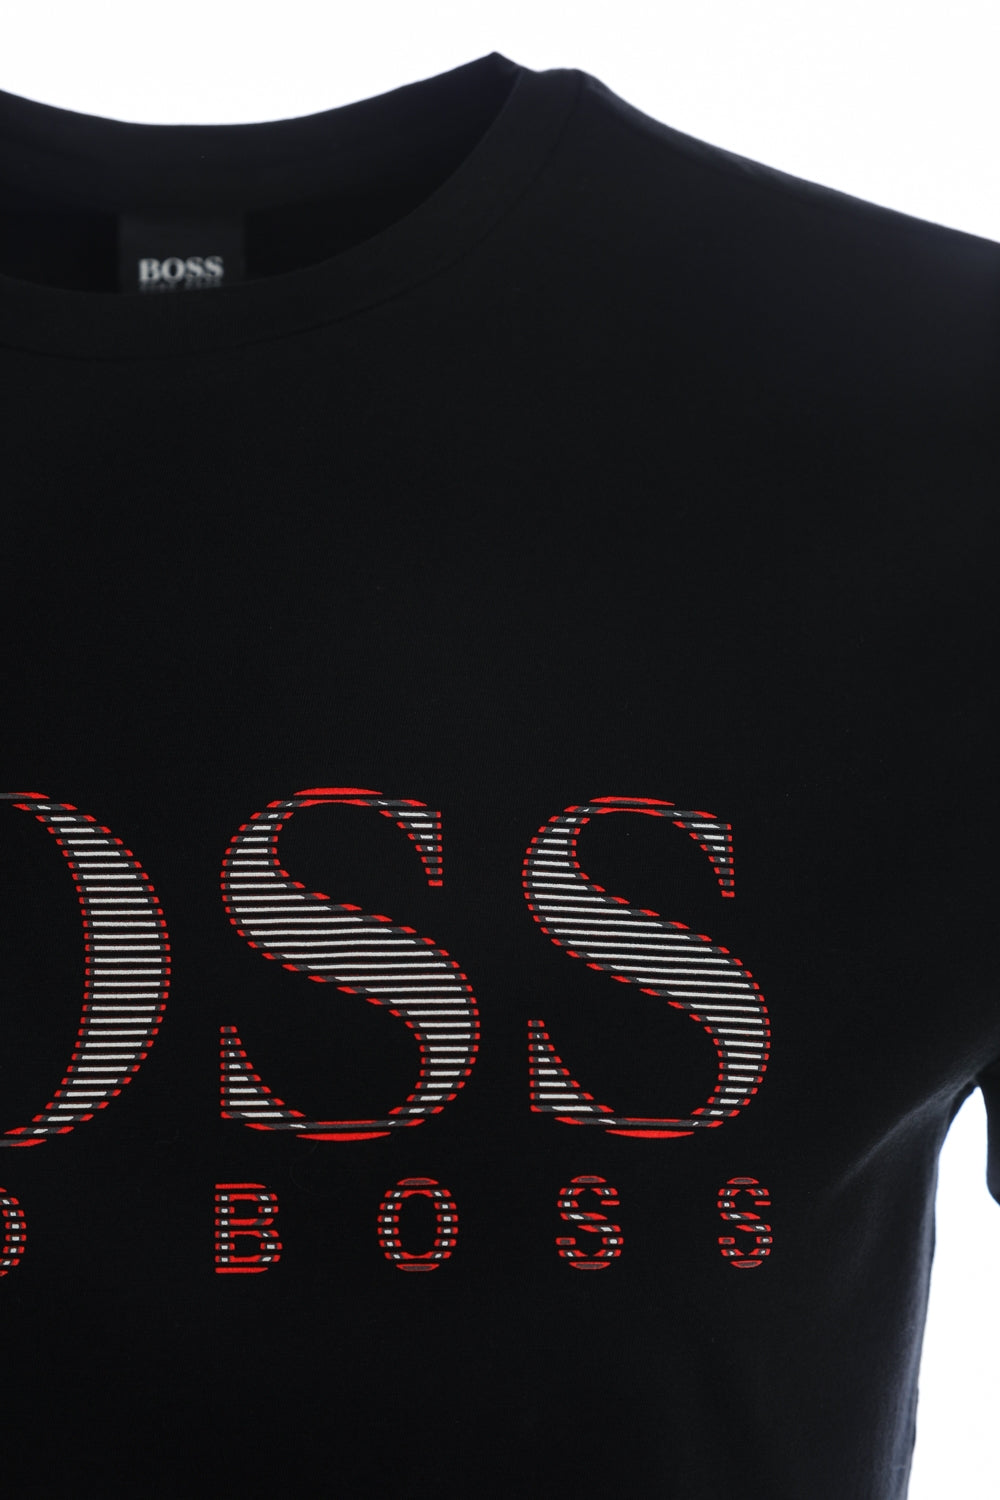 BOSS Tee 5 T-Shirt in Black